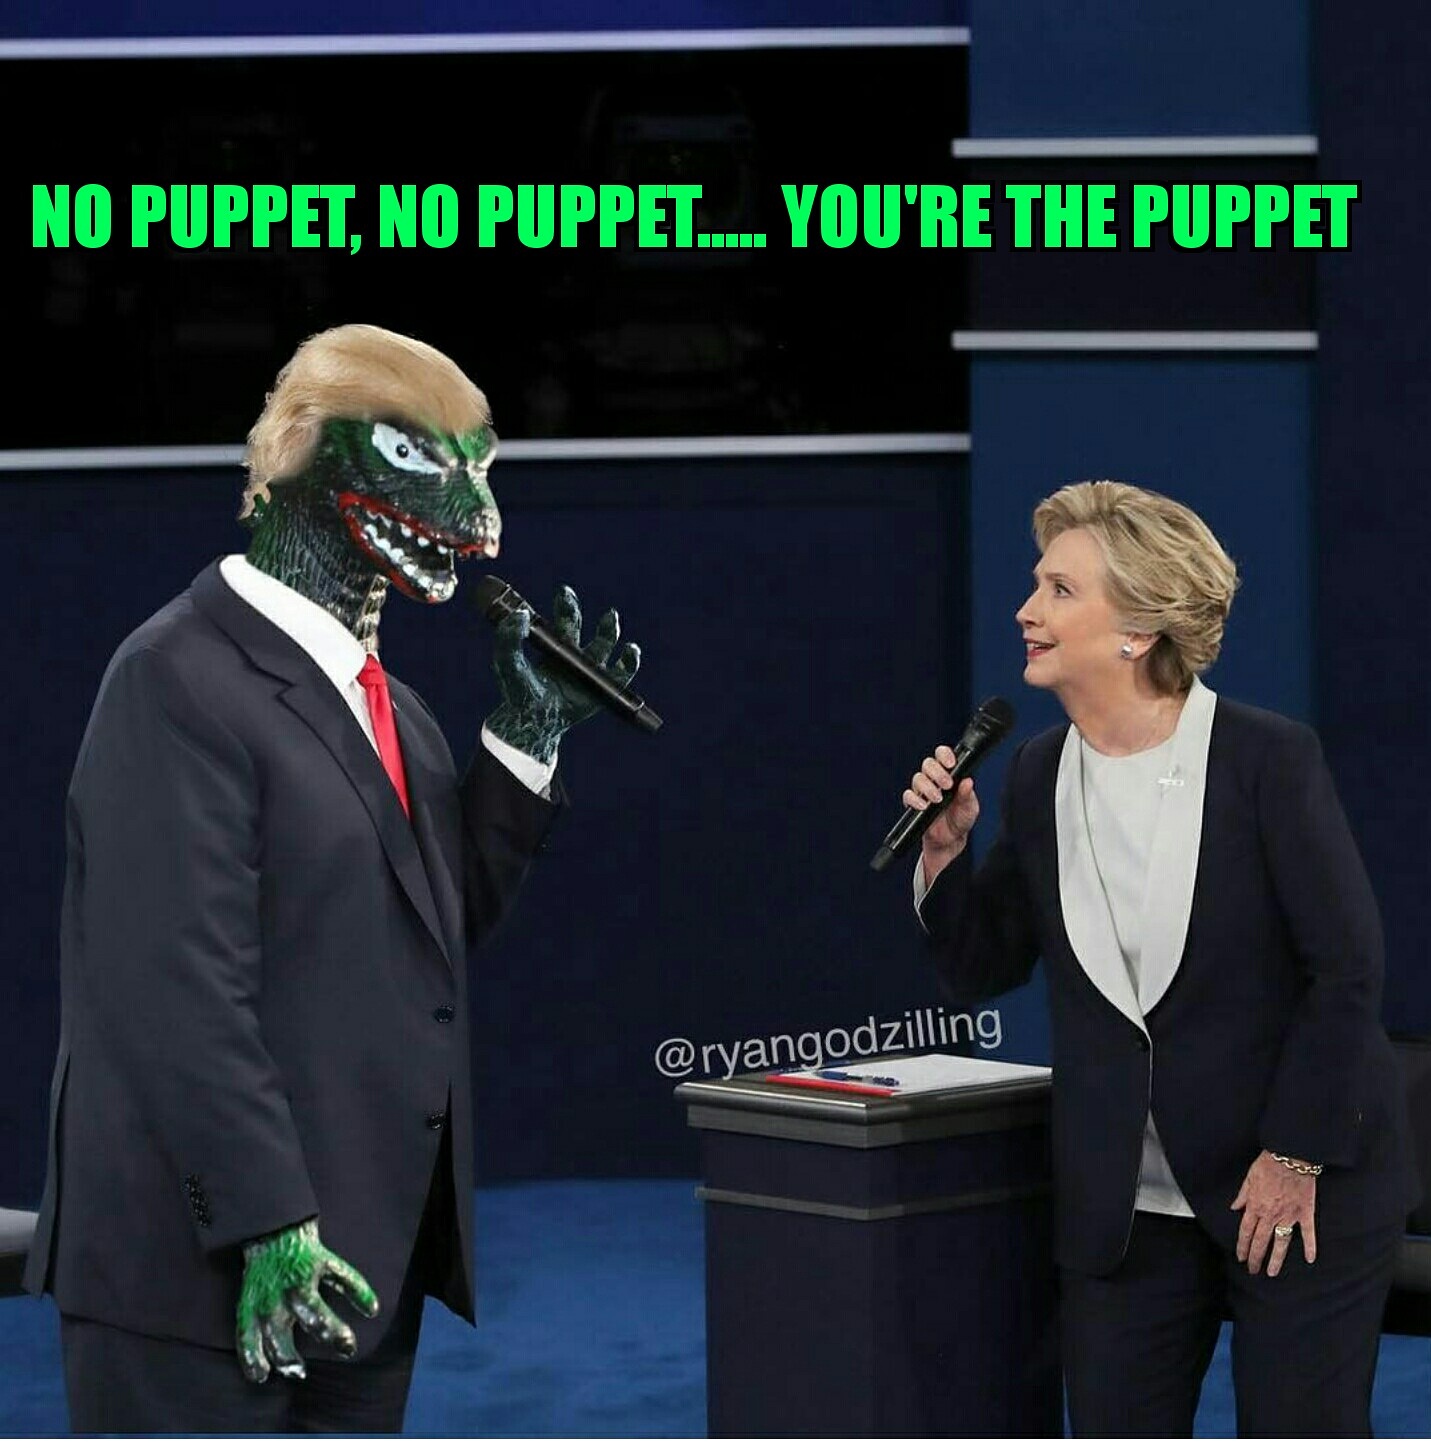 Trump is a Reptilian